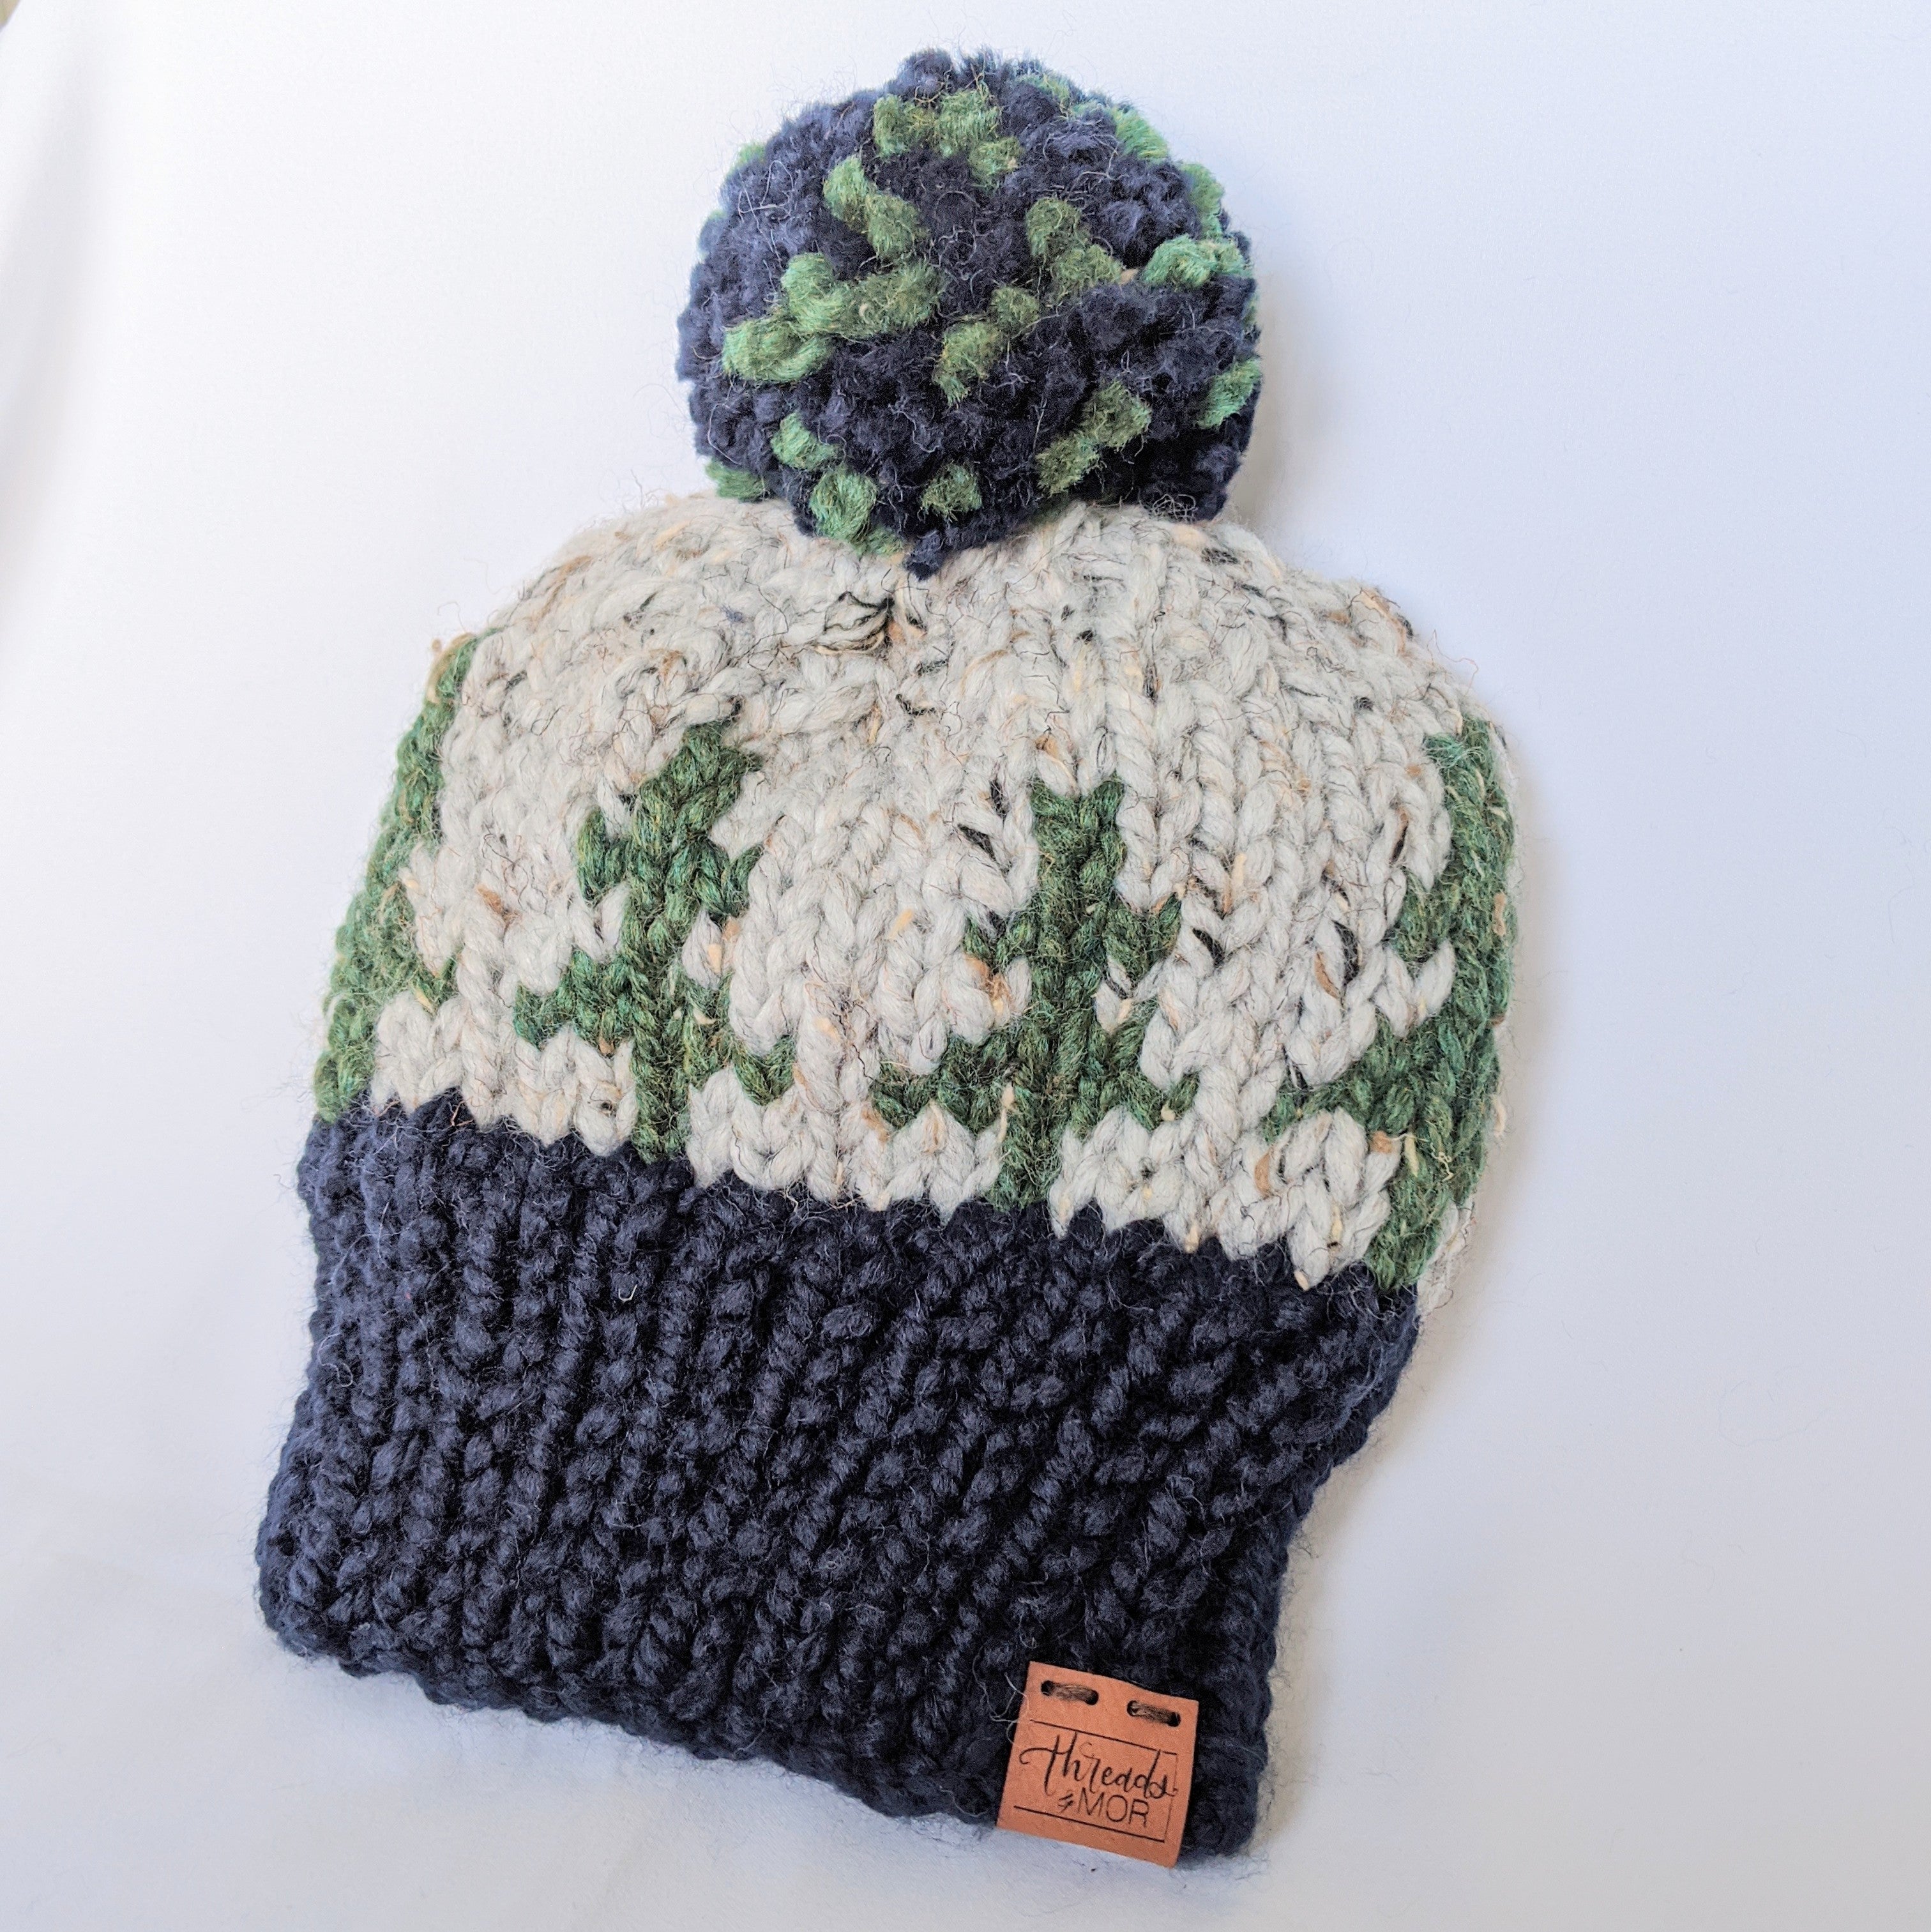 Evergreen knit beanie hat with yarn pompom